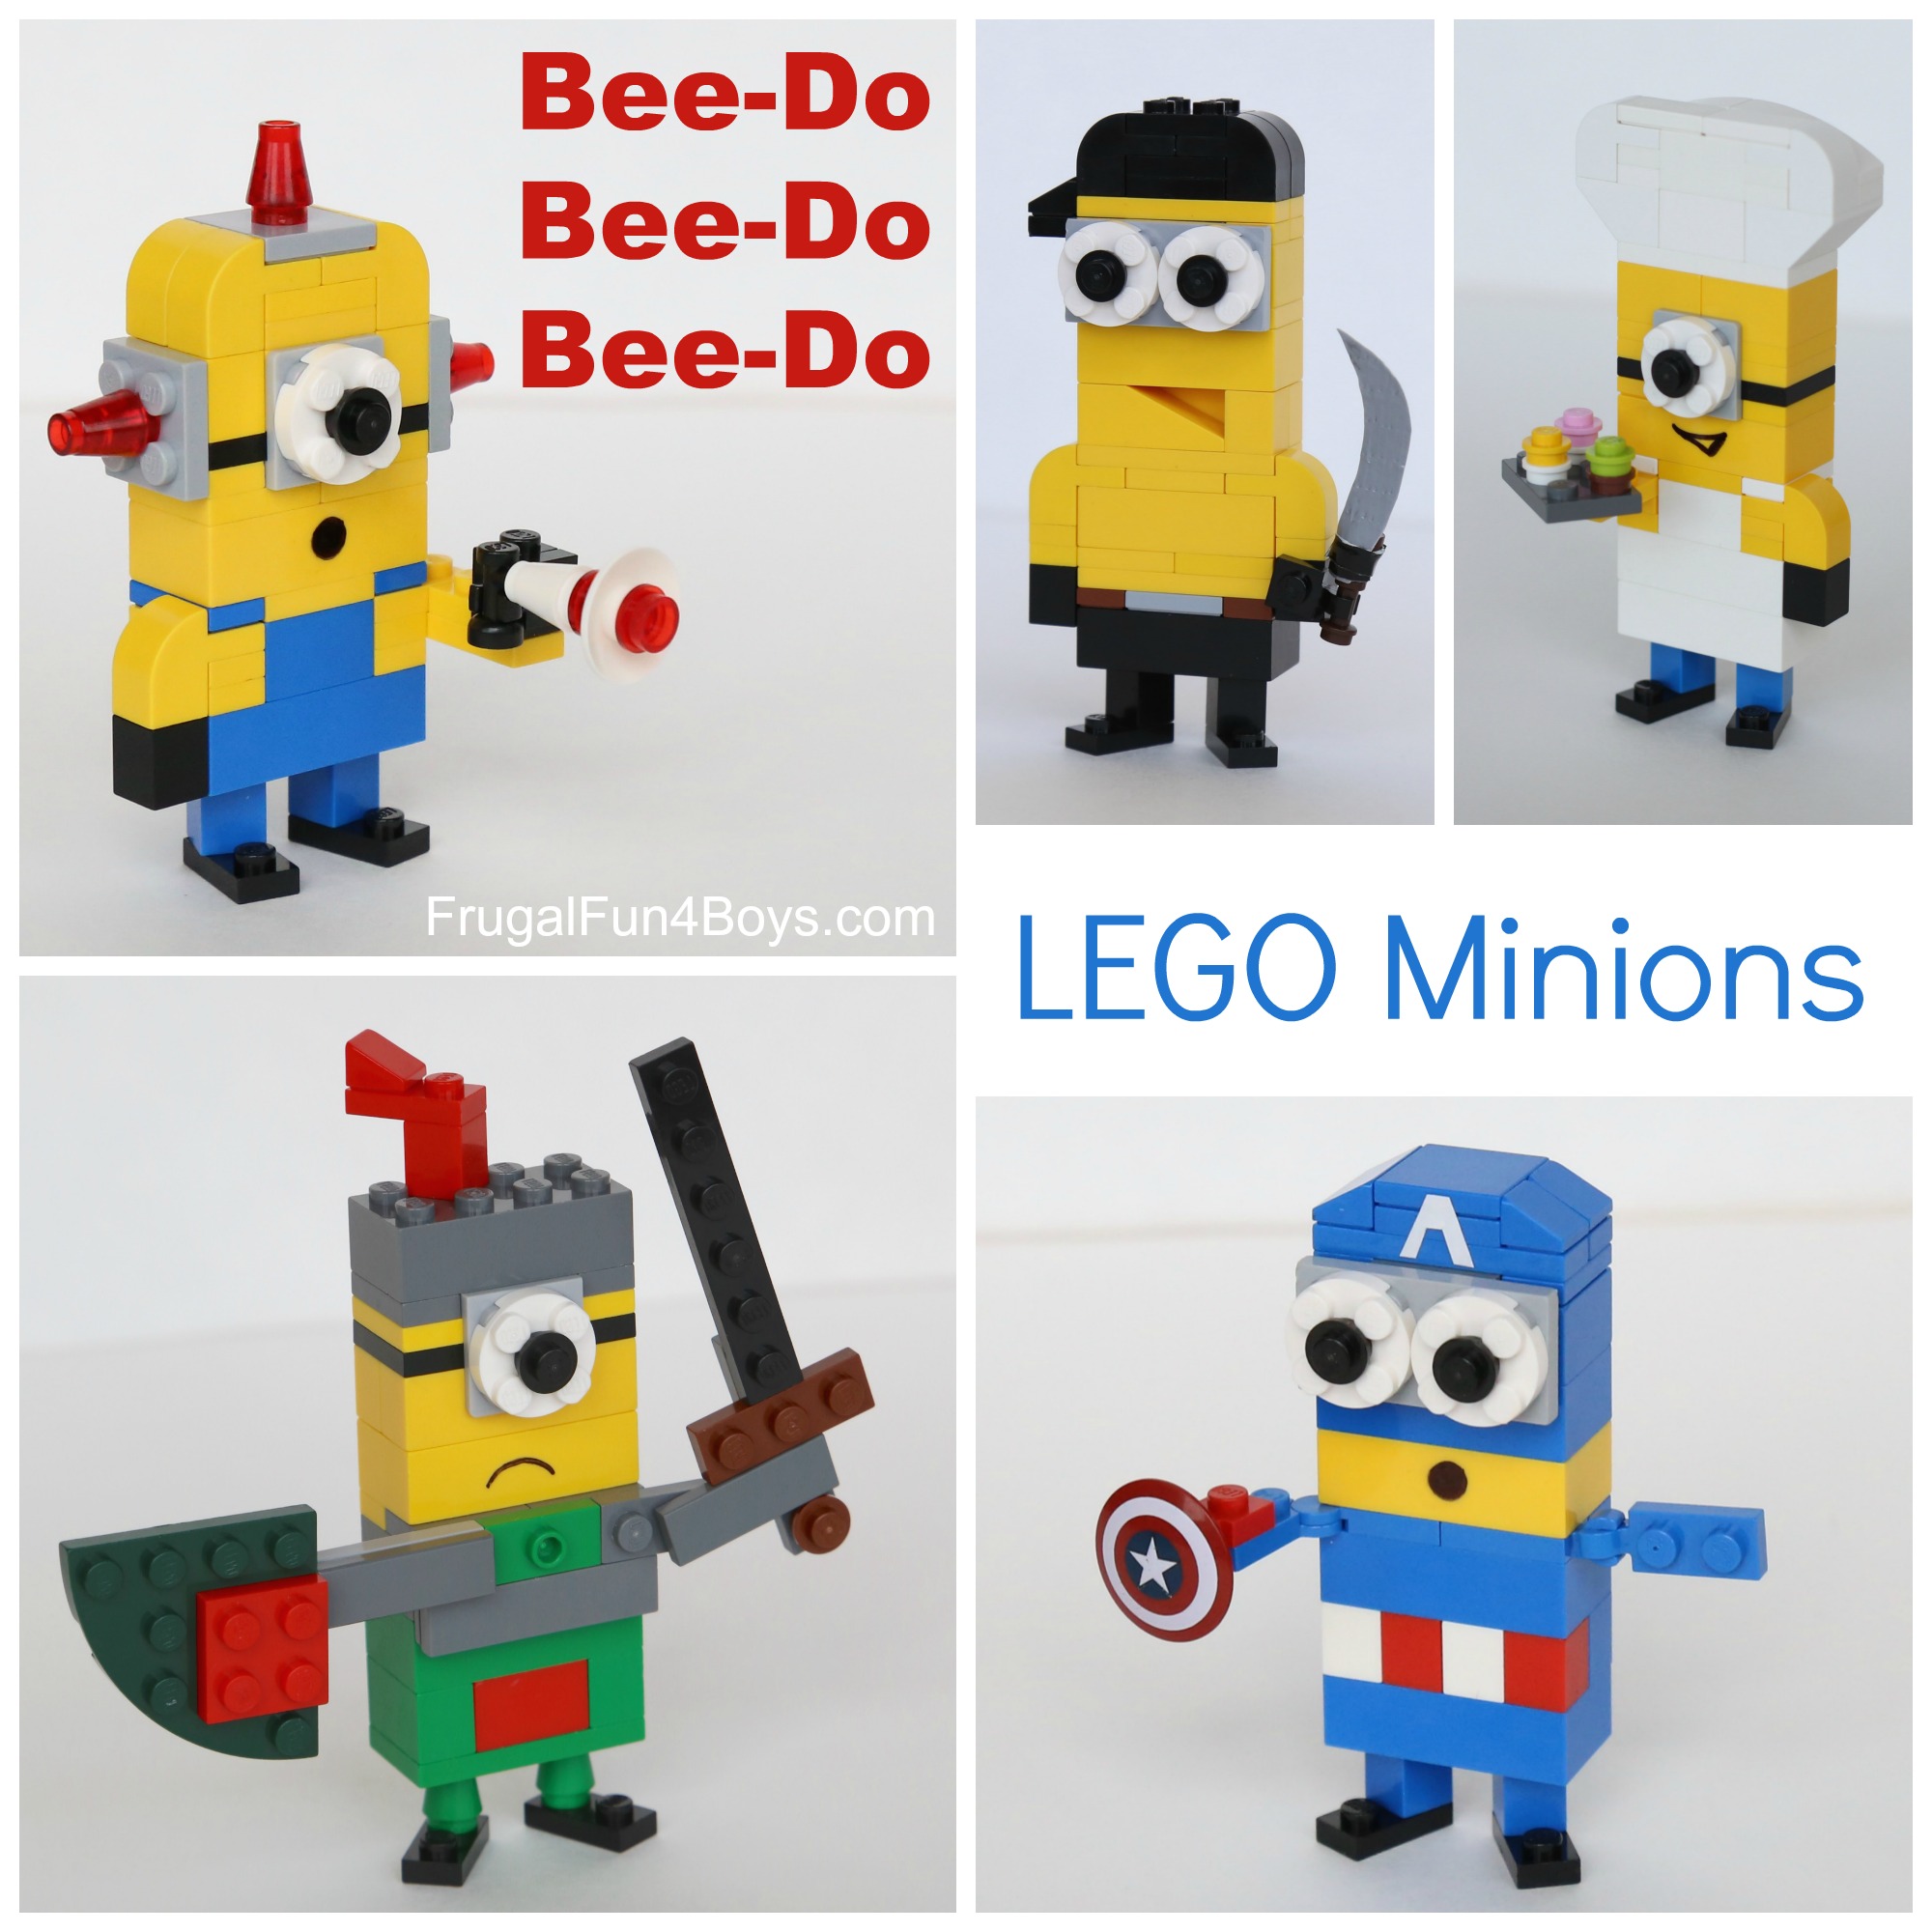 More LEGO Minions to Build